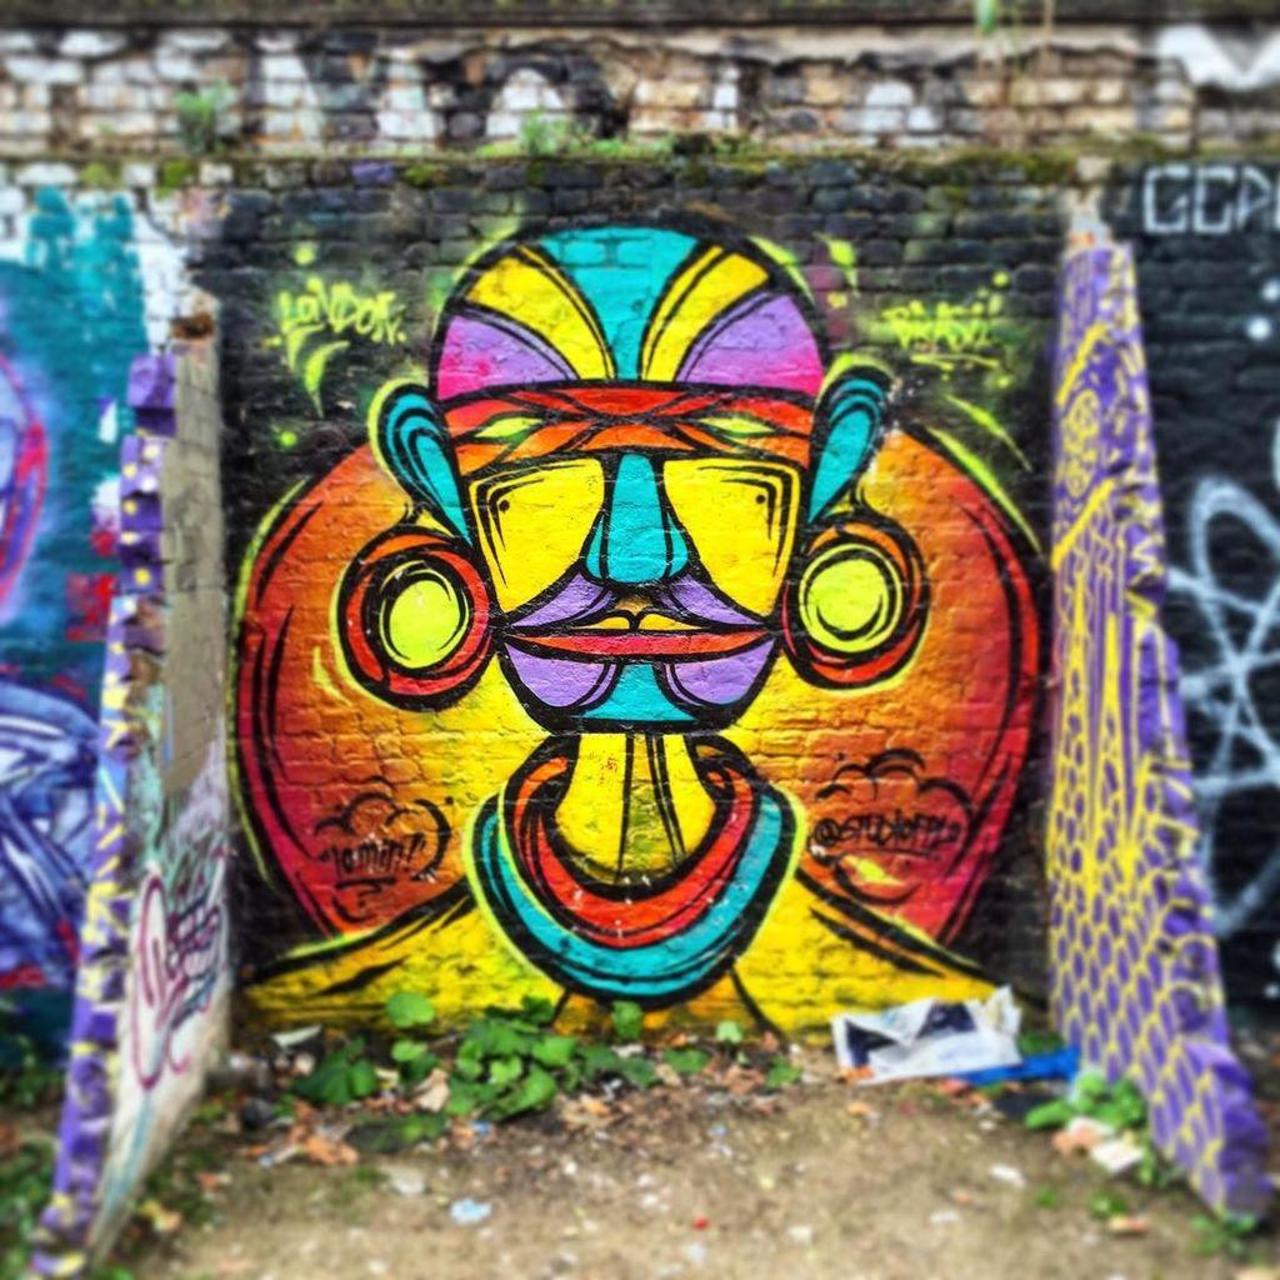 #streetarteverywhere #streetartlondon #streetart #graffitilondon #graffitiporn #graffitiart #graffiti #ig_graffiti … http://t.co/U357SJ73z1